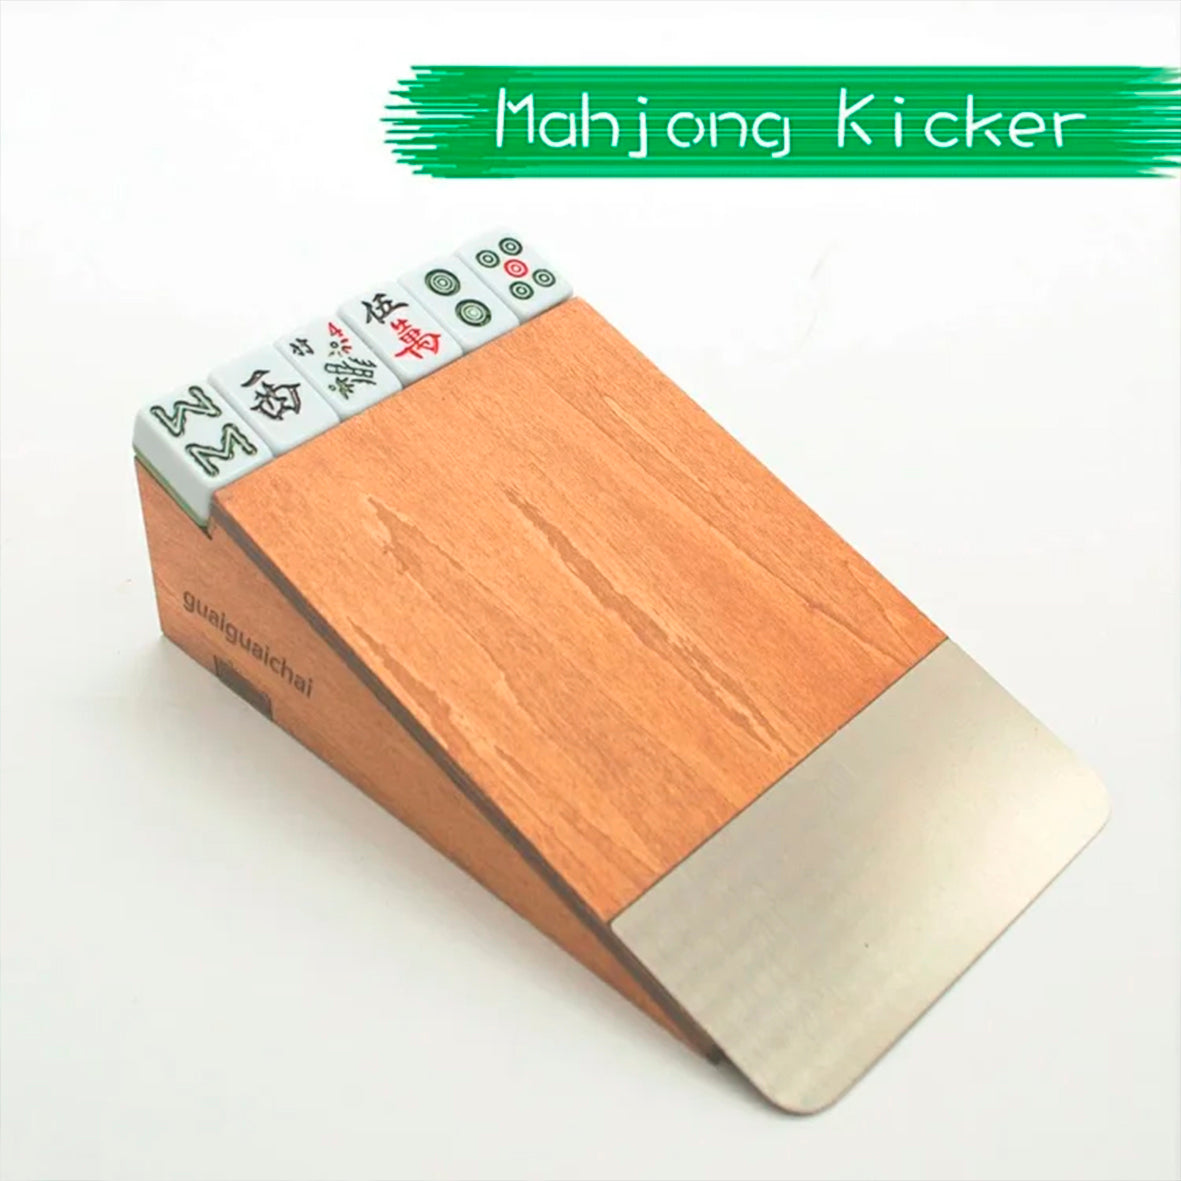 Mahjong Kicker